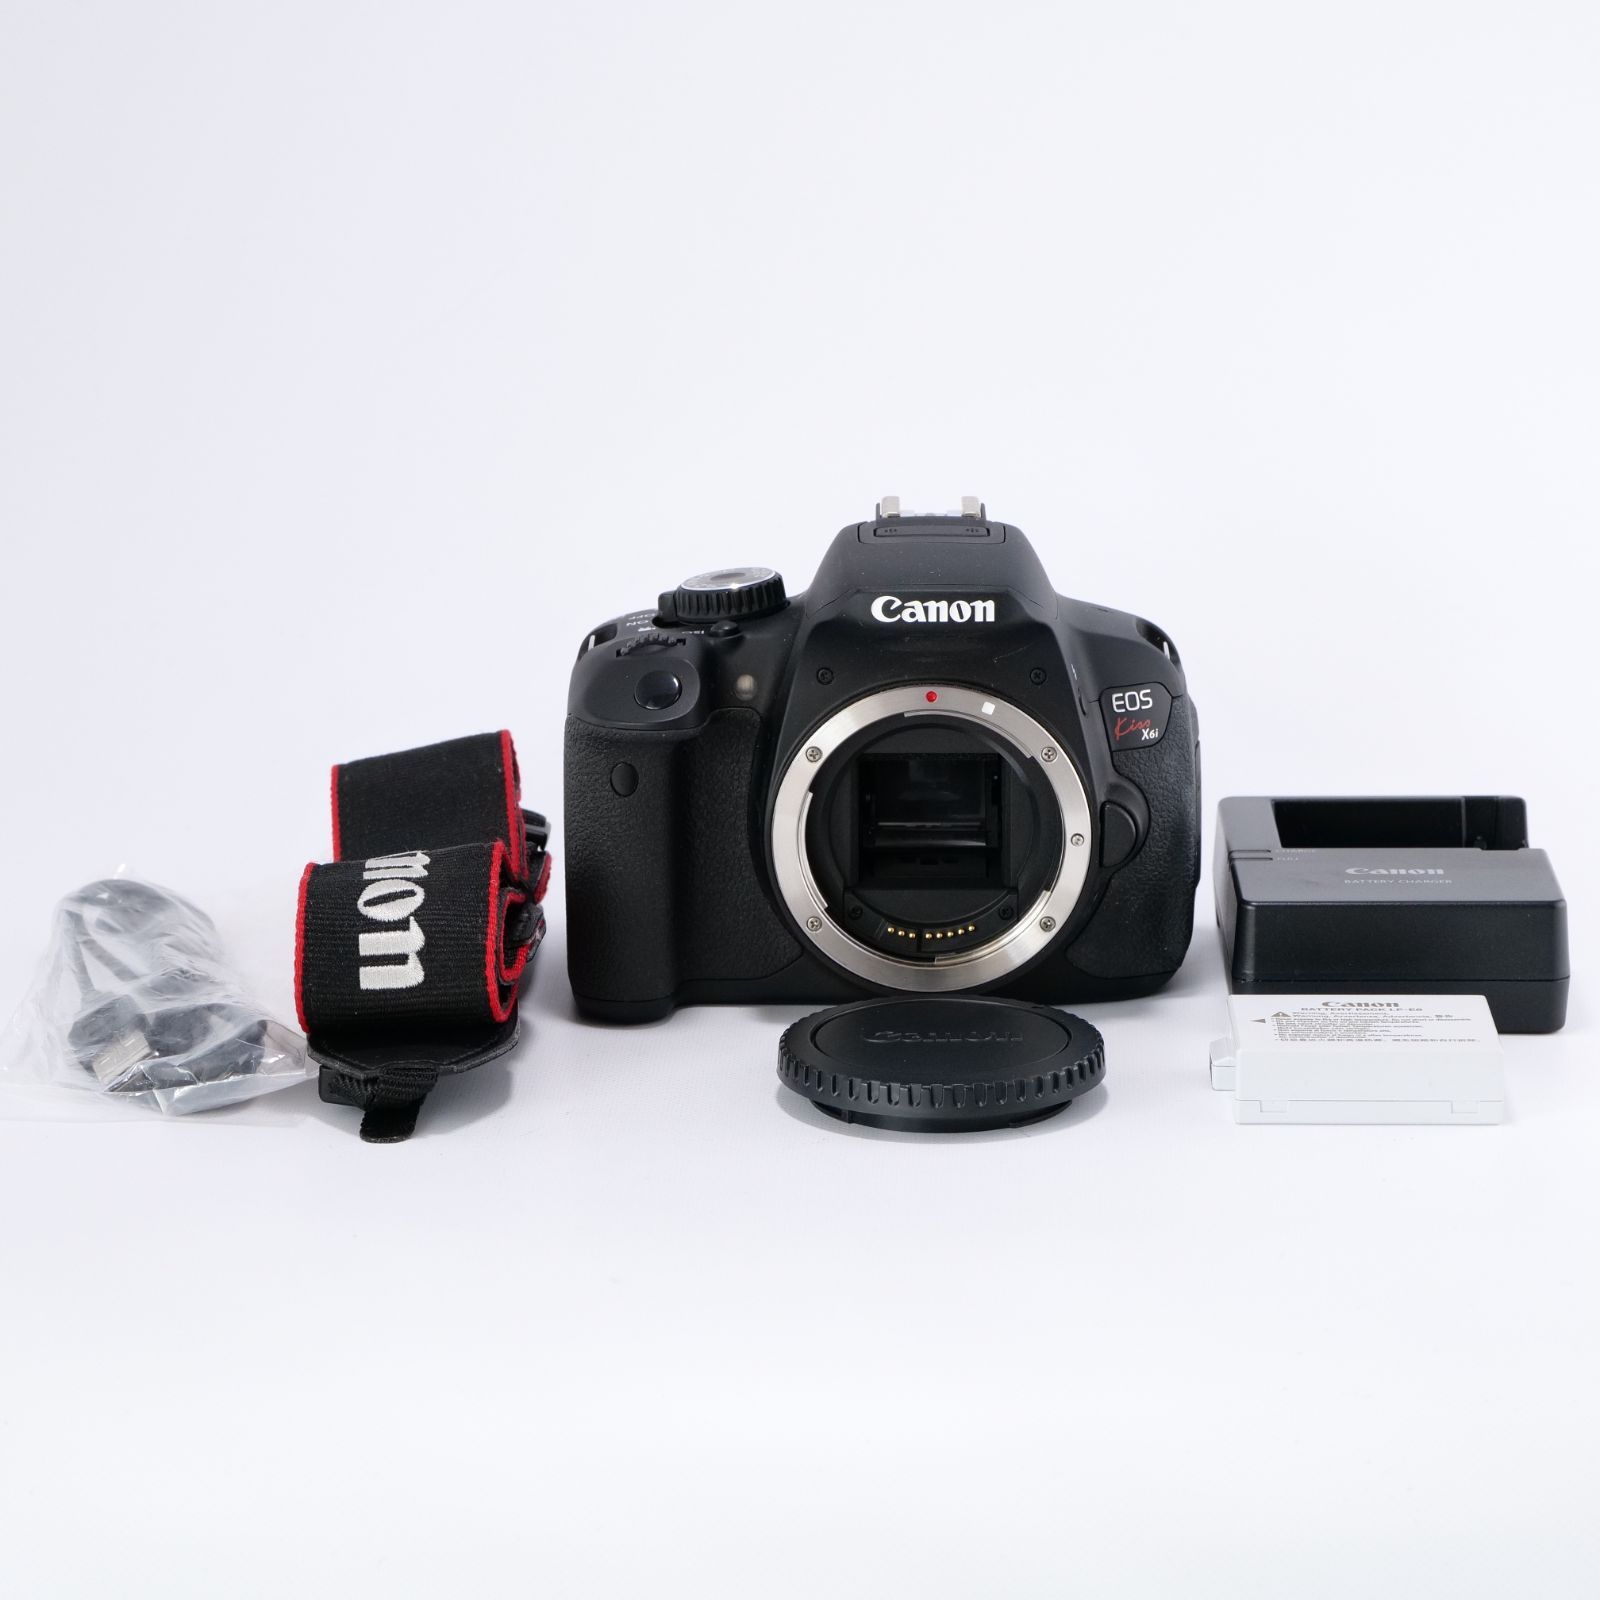 Canon キヤノン デジタル一眼レフカメラ EOS Kiss X6i ボディ カメラ本舗｜Camera honpo メルカリ